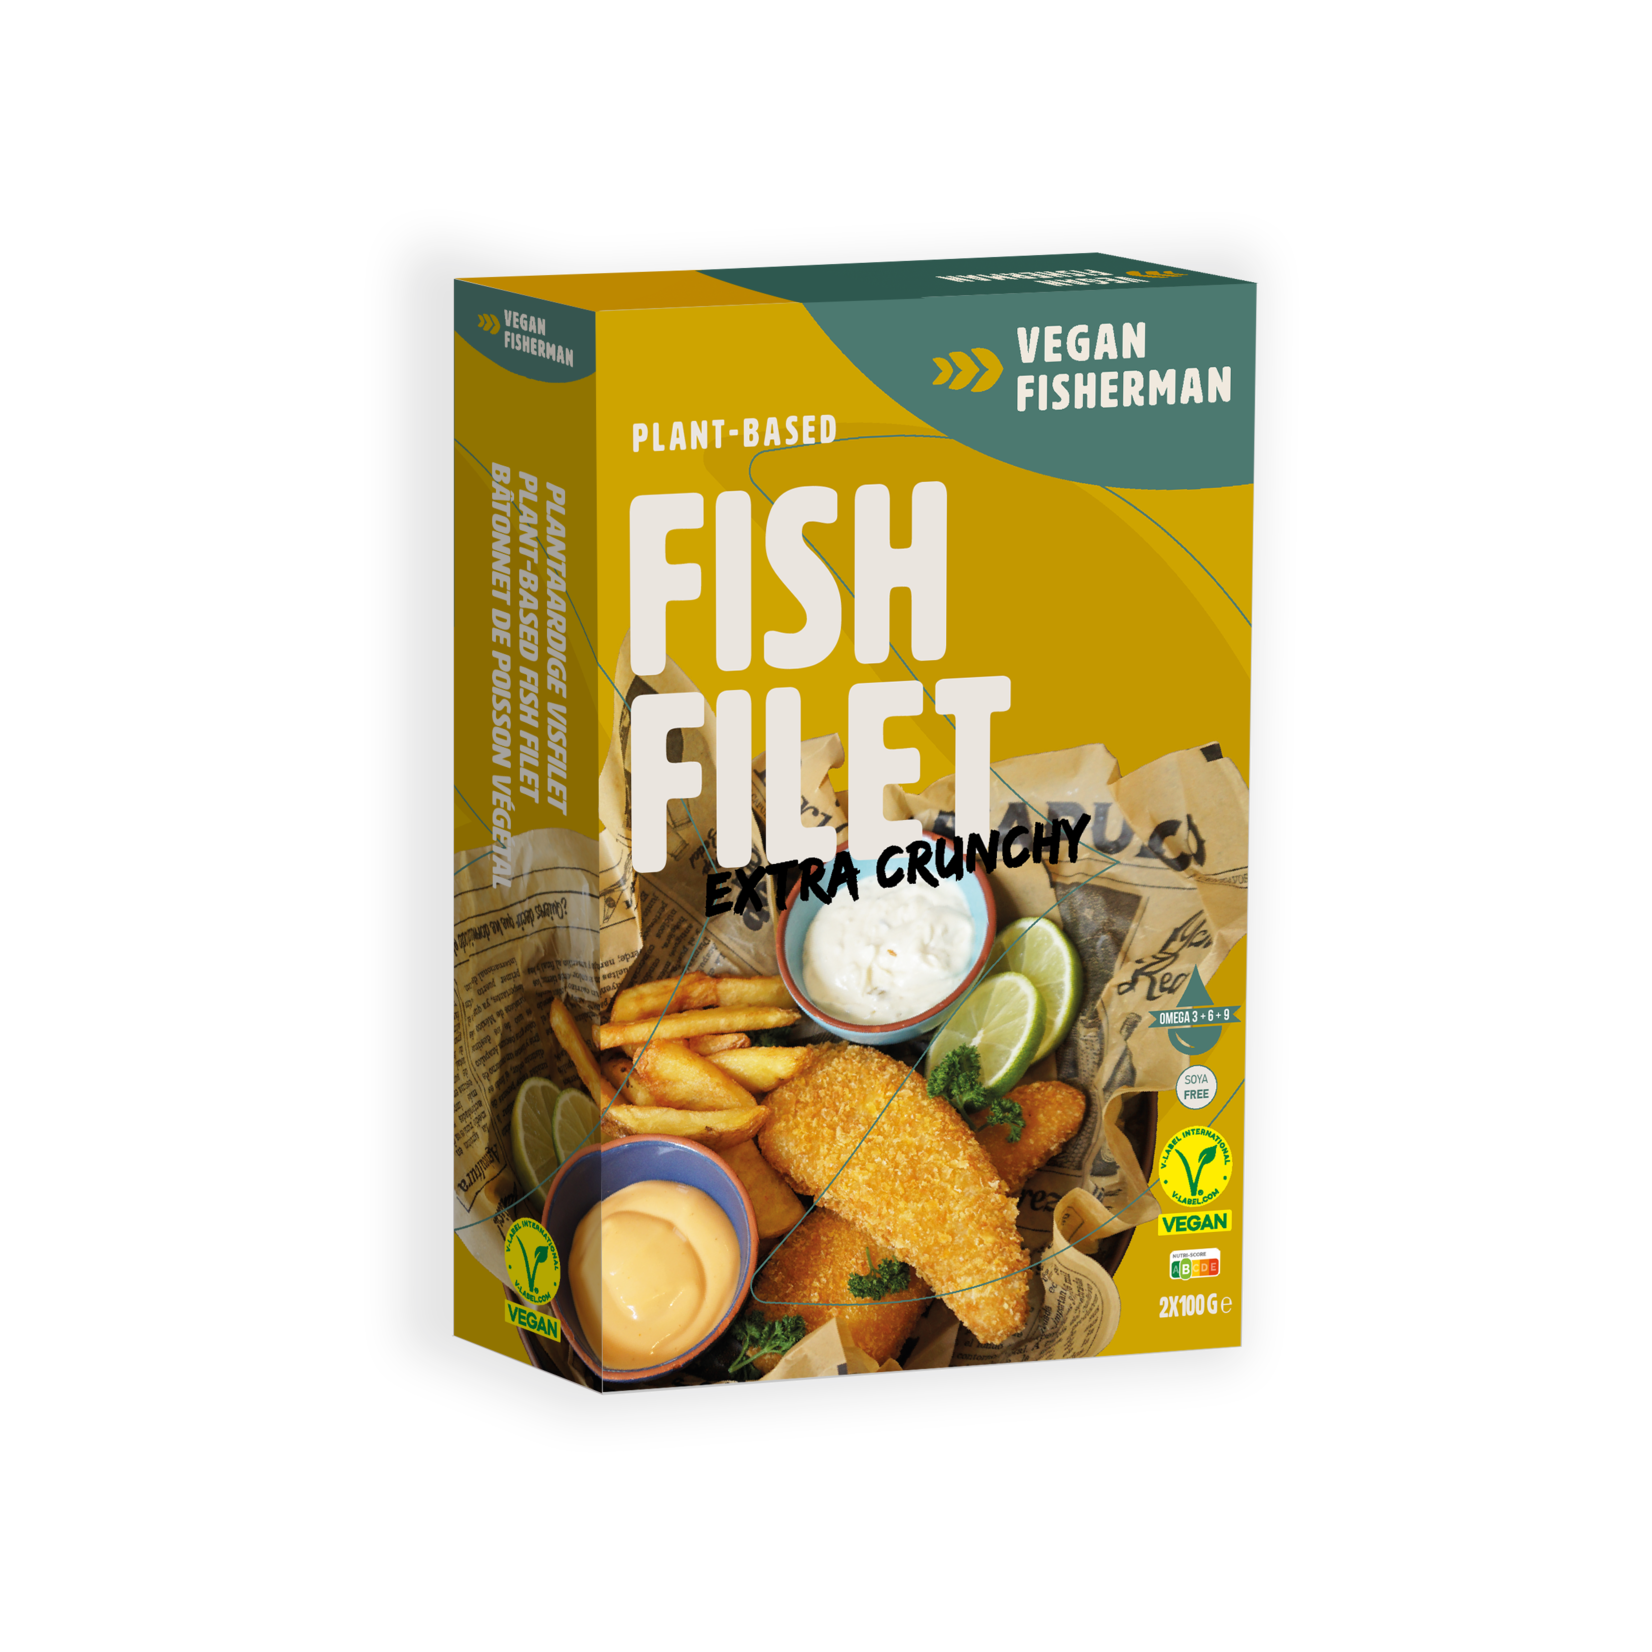 Vegan Visboer - Vegan Fisherman Tasting box: Burgers 100 gr, Filet, Fish Stick, Chunks, Shrimp, Fish Fries.